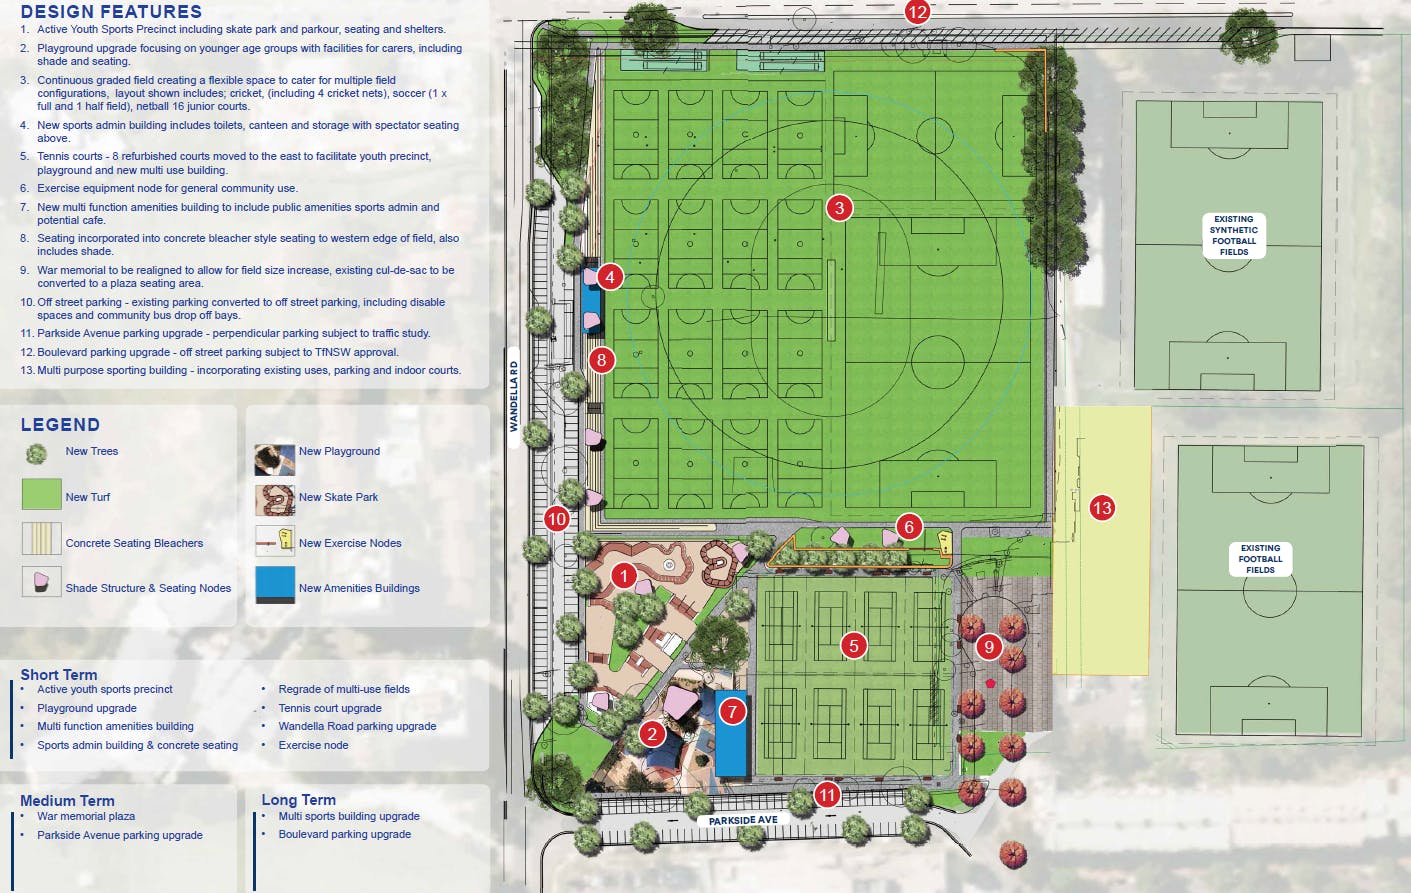 July 2021 Seymour Shaw draft masterplan image.PNG